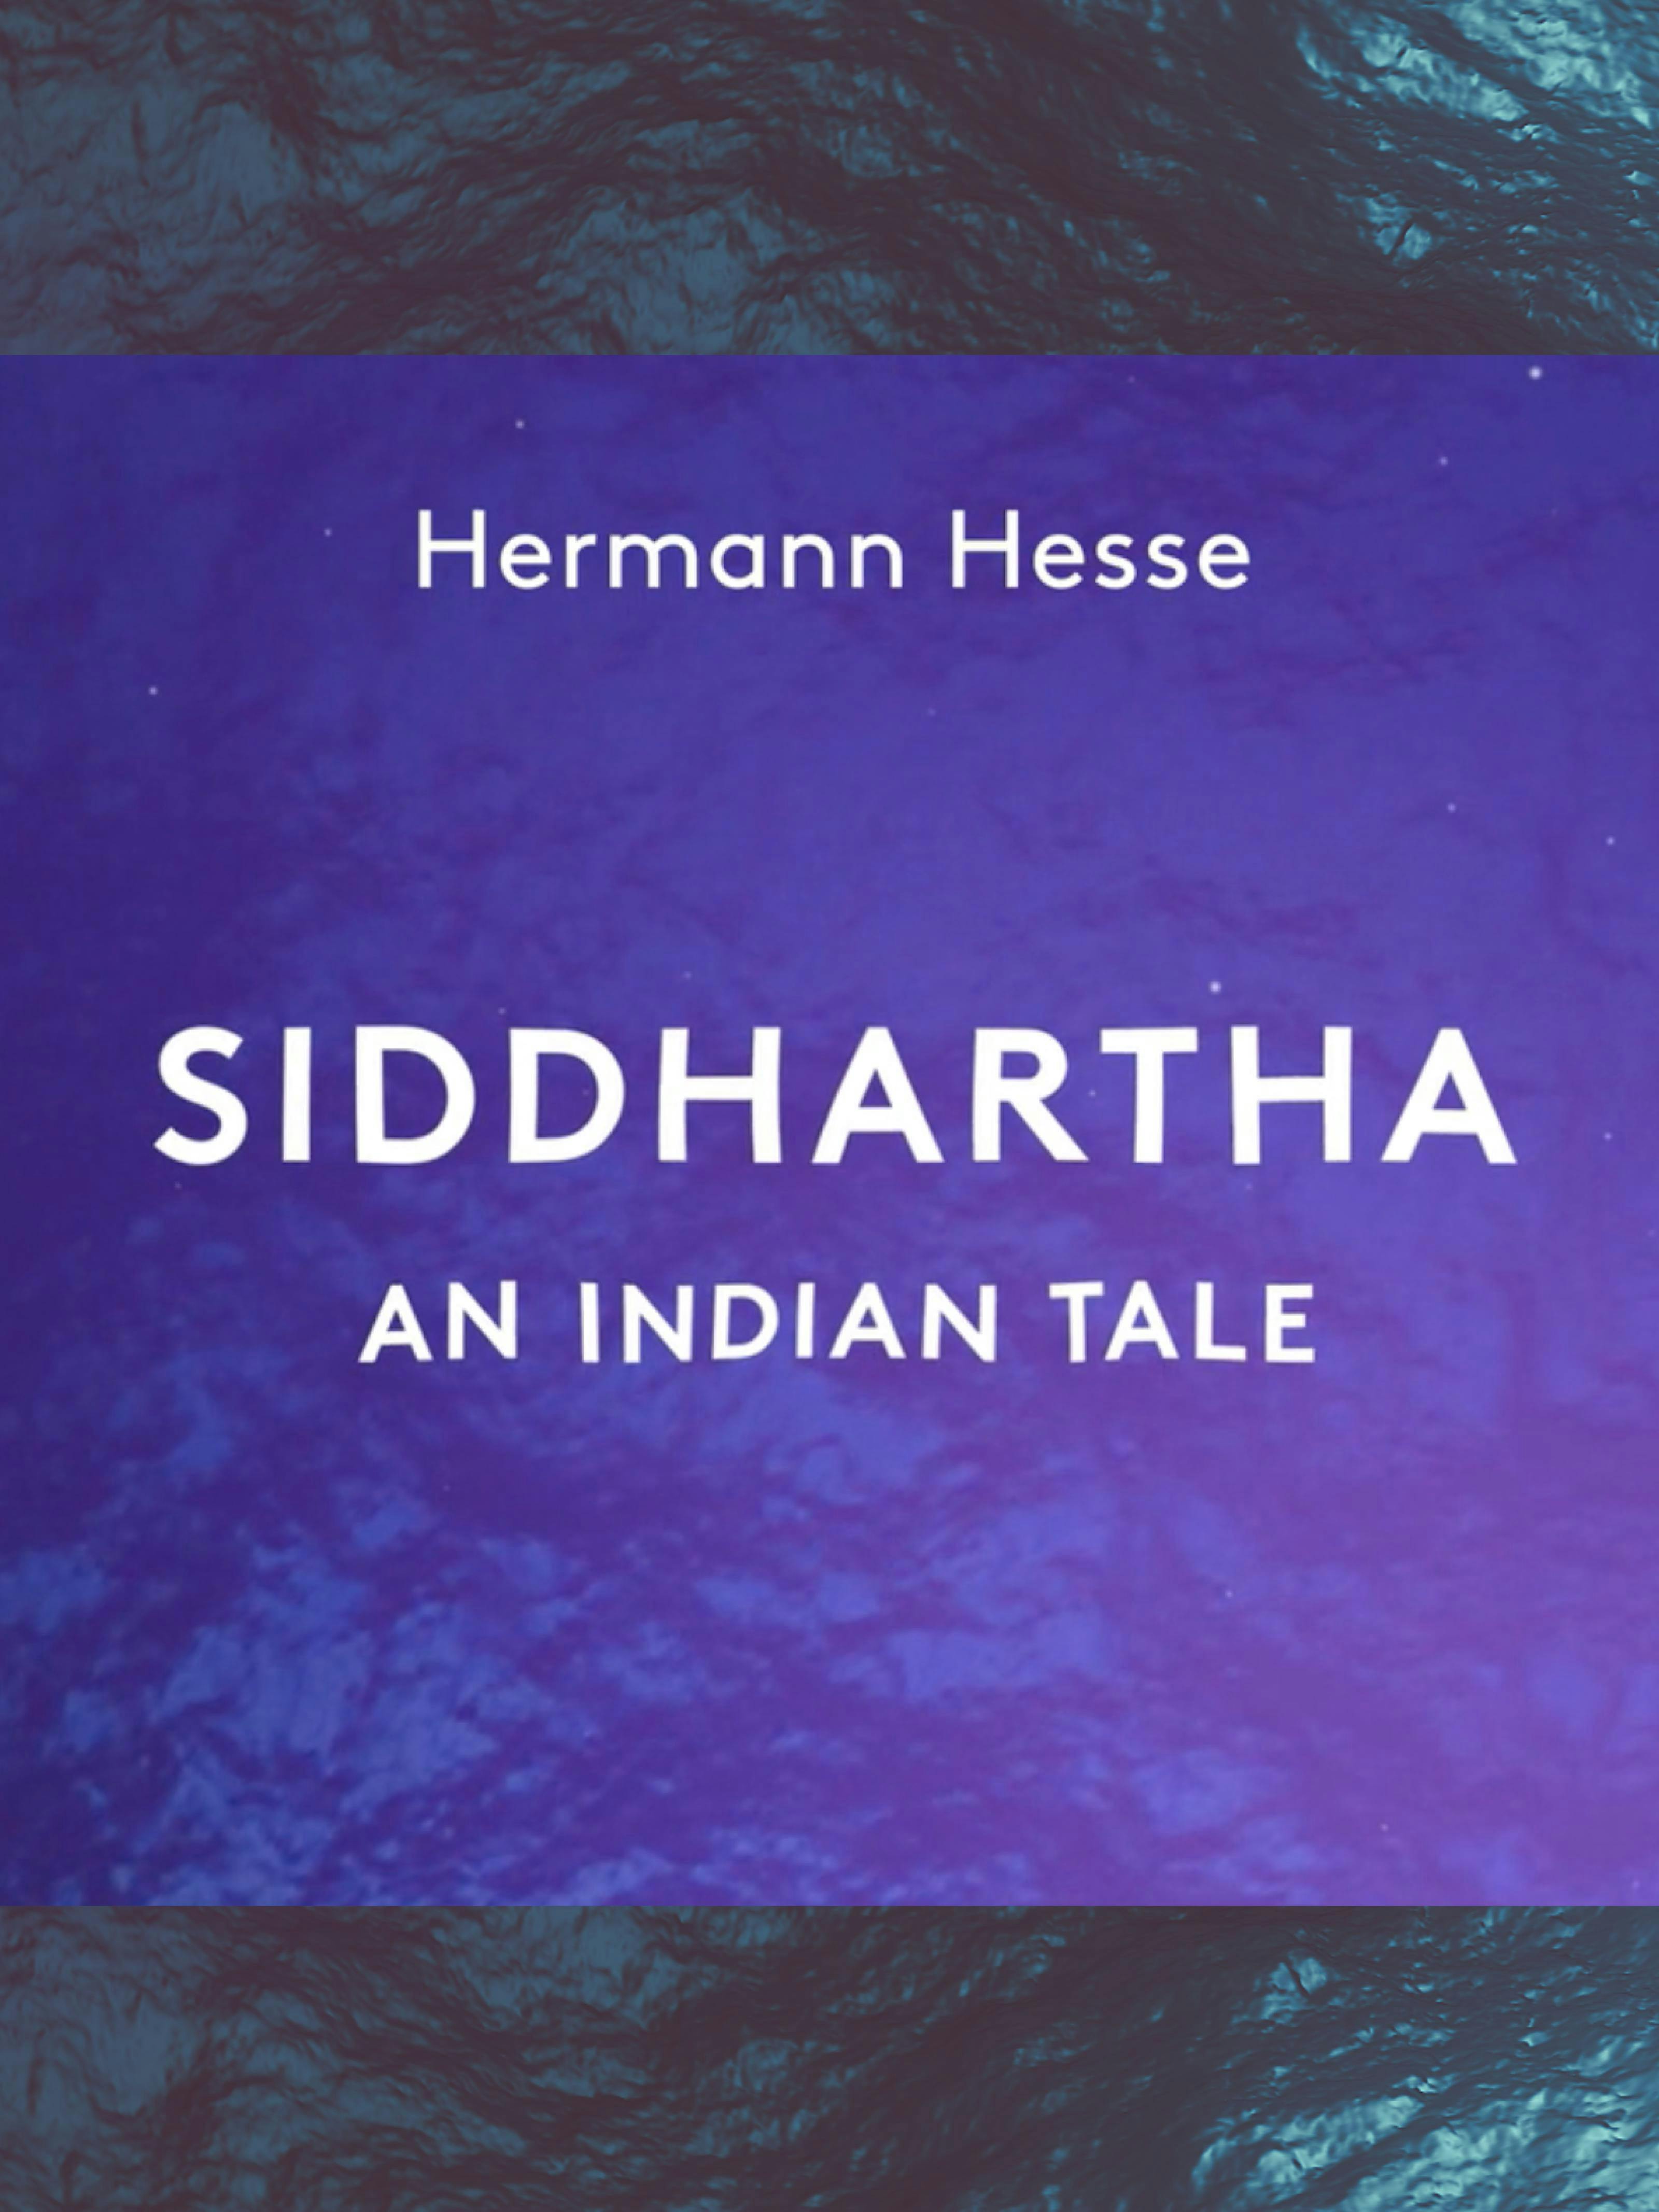 Siddhartha: unabridged narration with soundtrack - Hermann Hesse